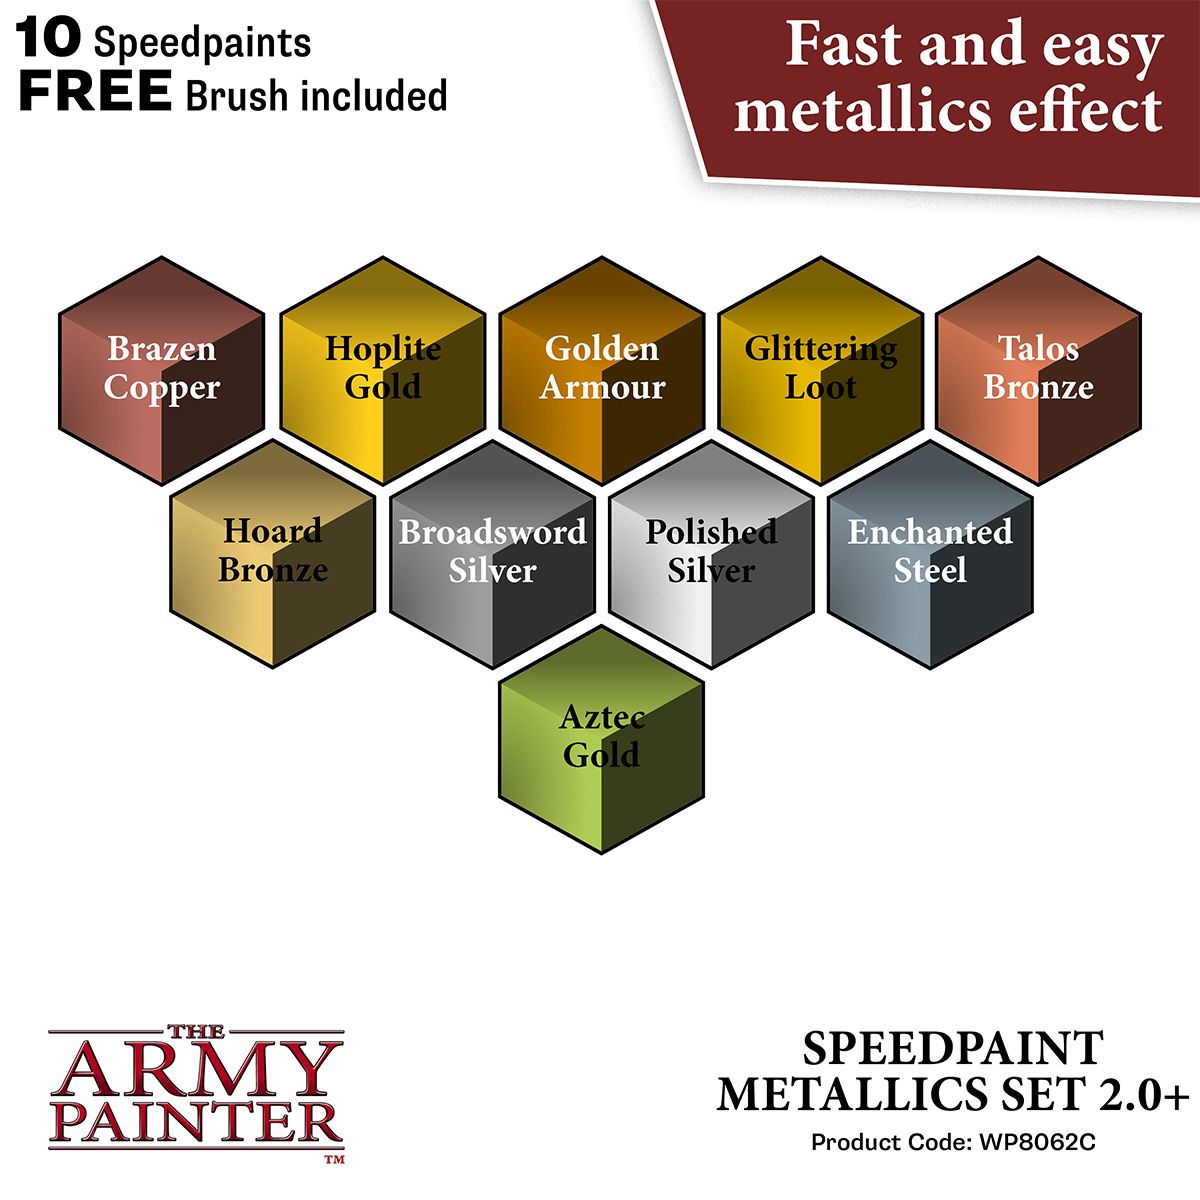 Army Painter Speedpaint Metallic Set 2.0